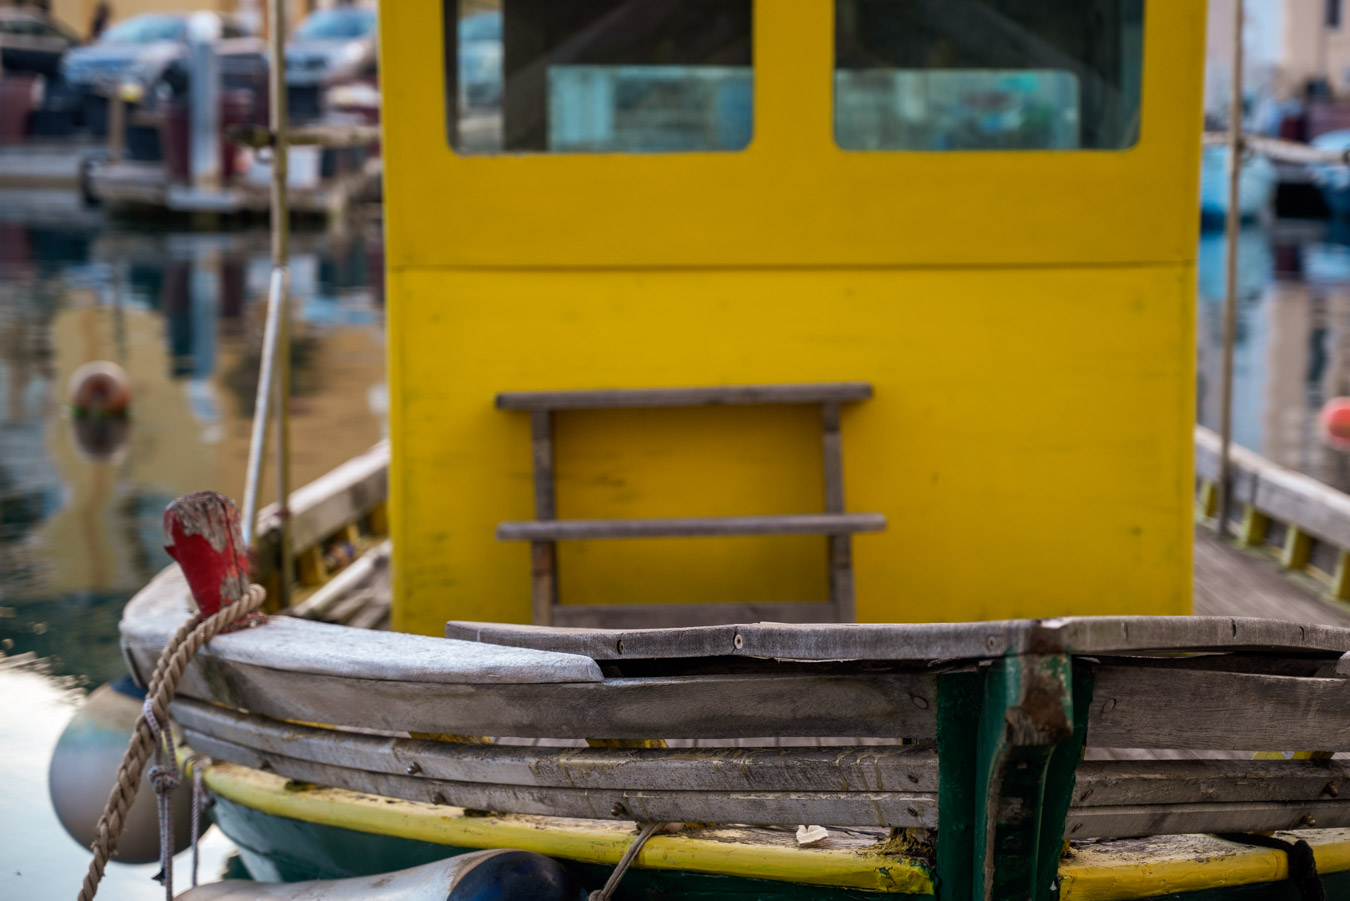 Yellow fishing boat